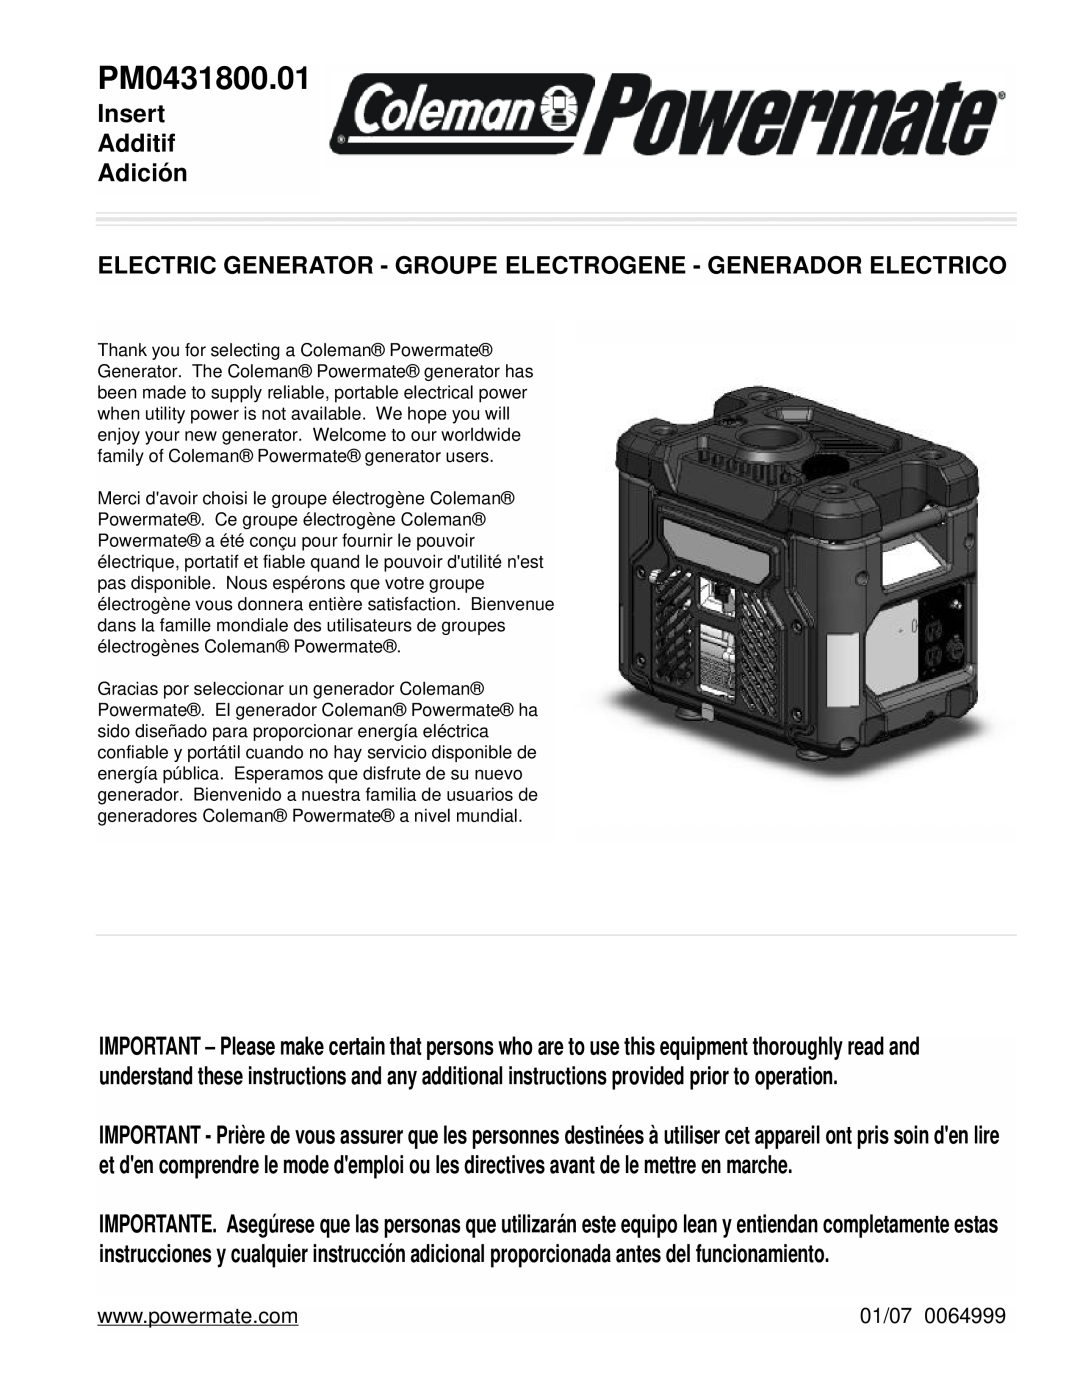 Powermate PM0431800.01 manual Insert Additif Adición, Electric Generator - Groupe Electrogene - Generador Electrico, 01/07 